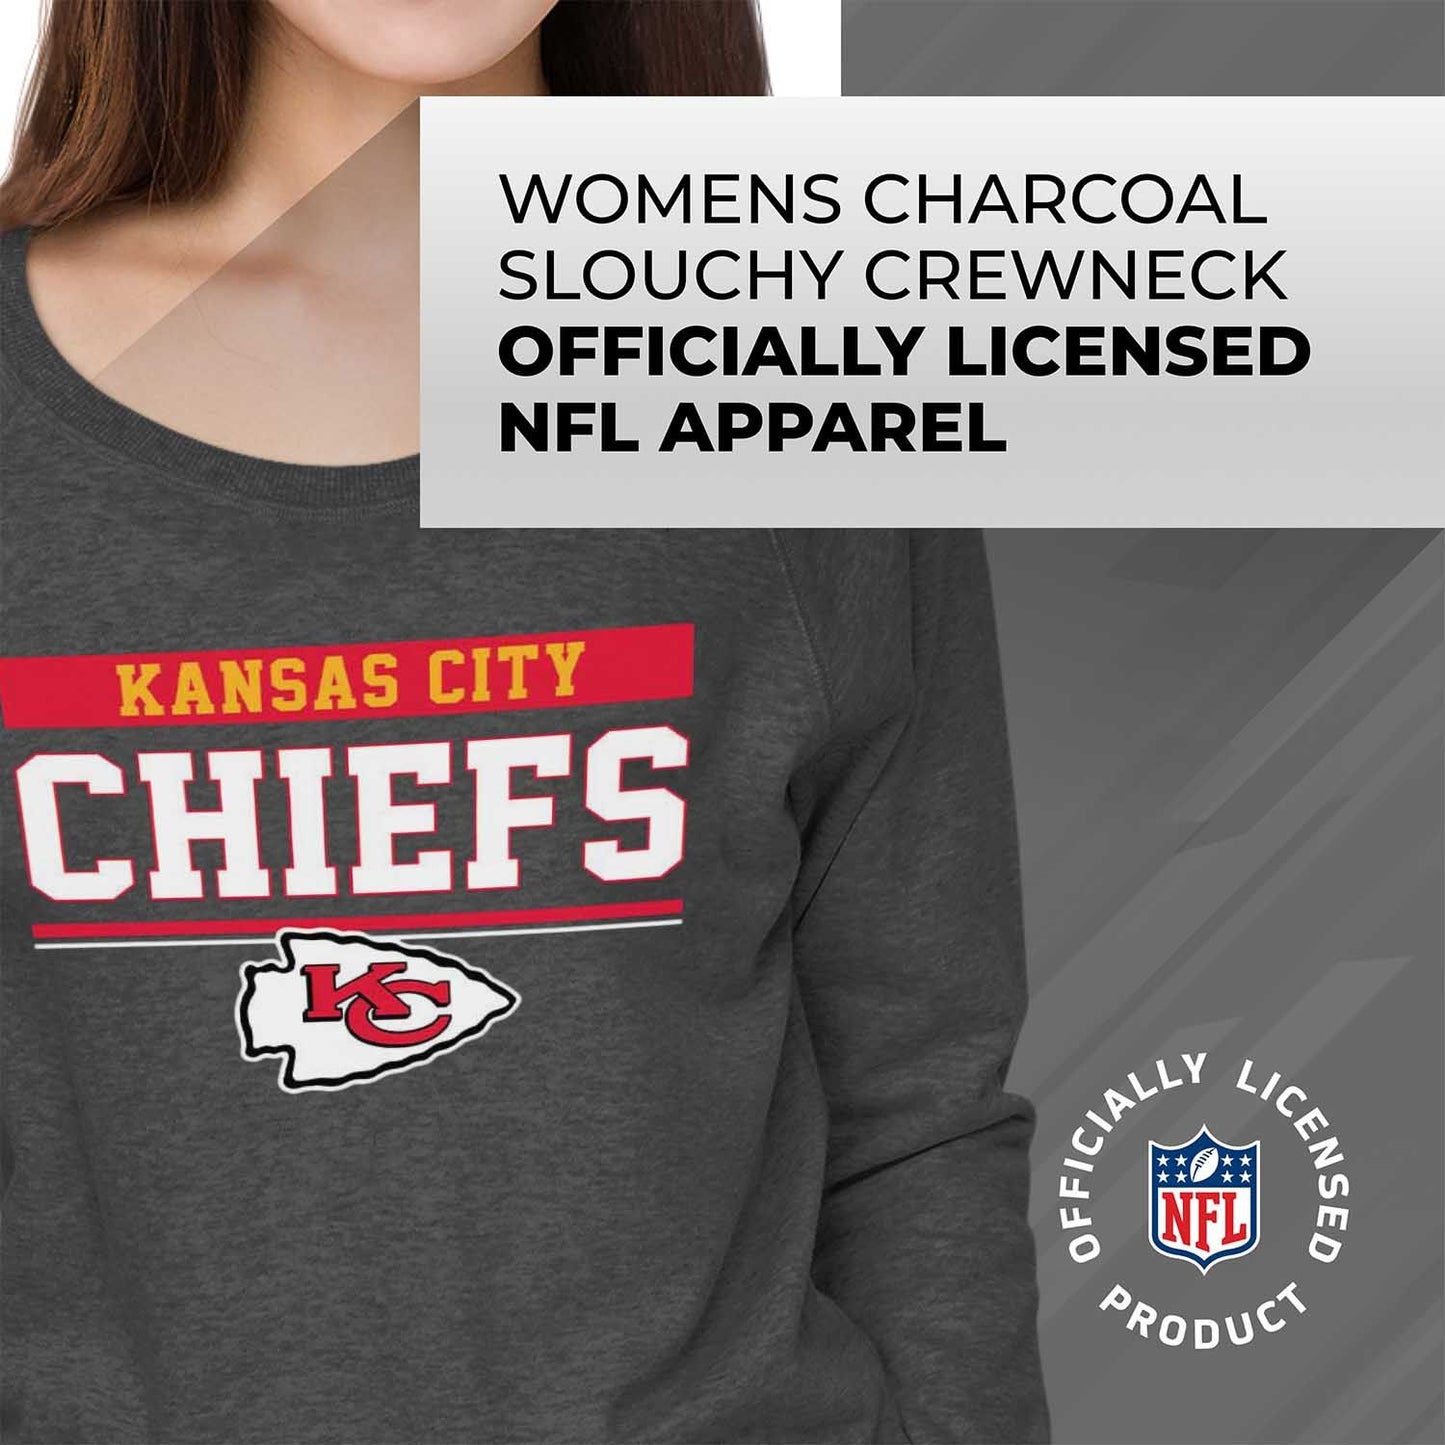 Kansas City Chiefs NFL Womens Charcoal Crew Neck Football Apparel - Charcoal